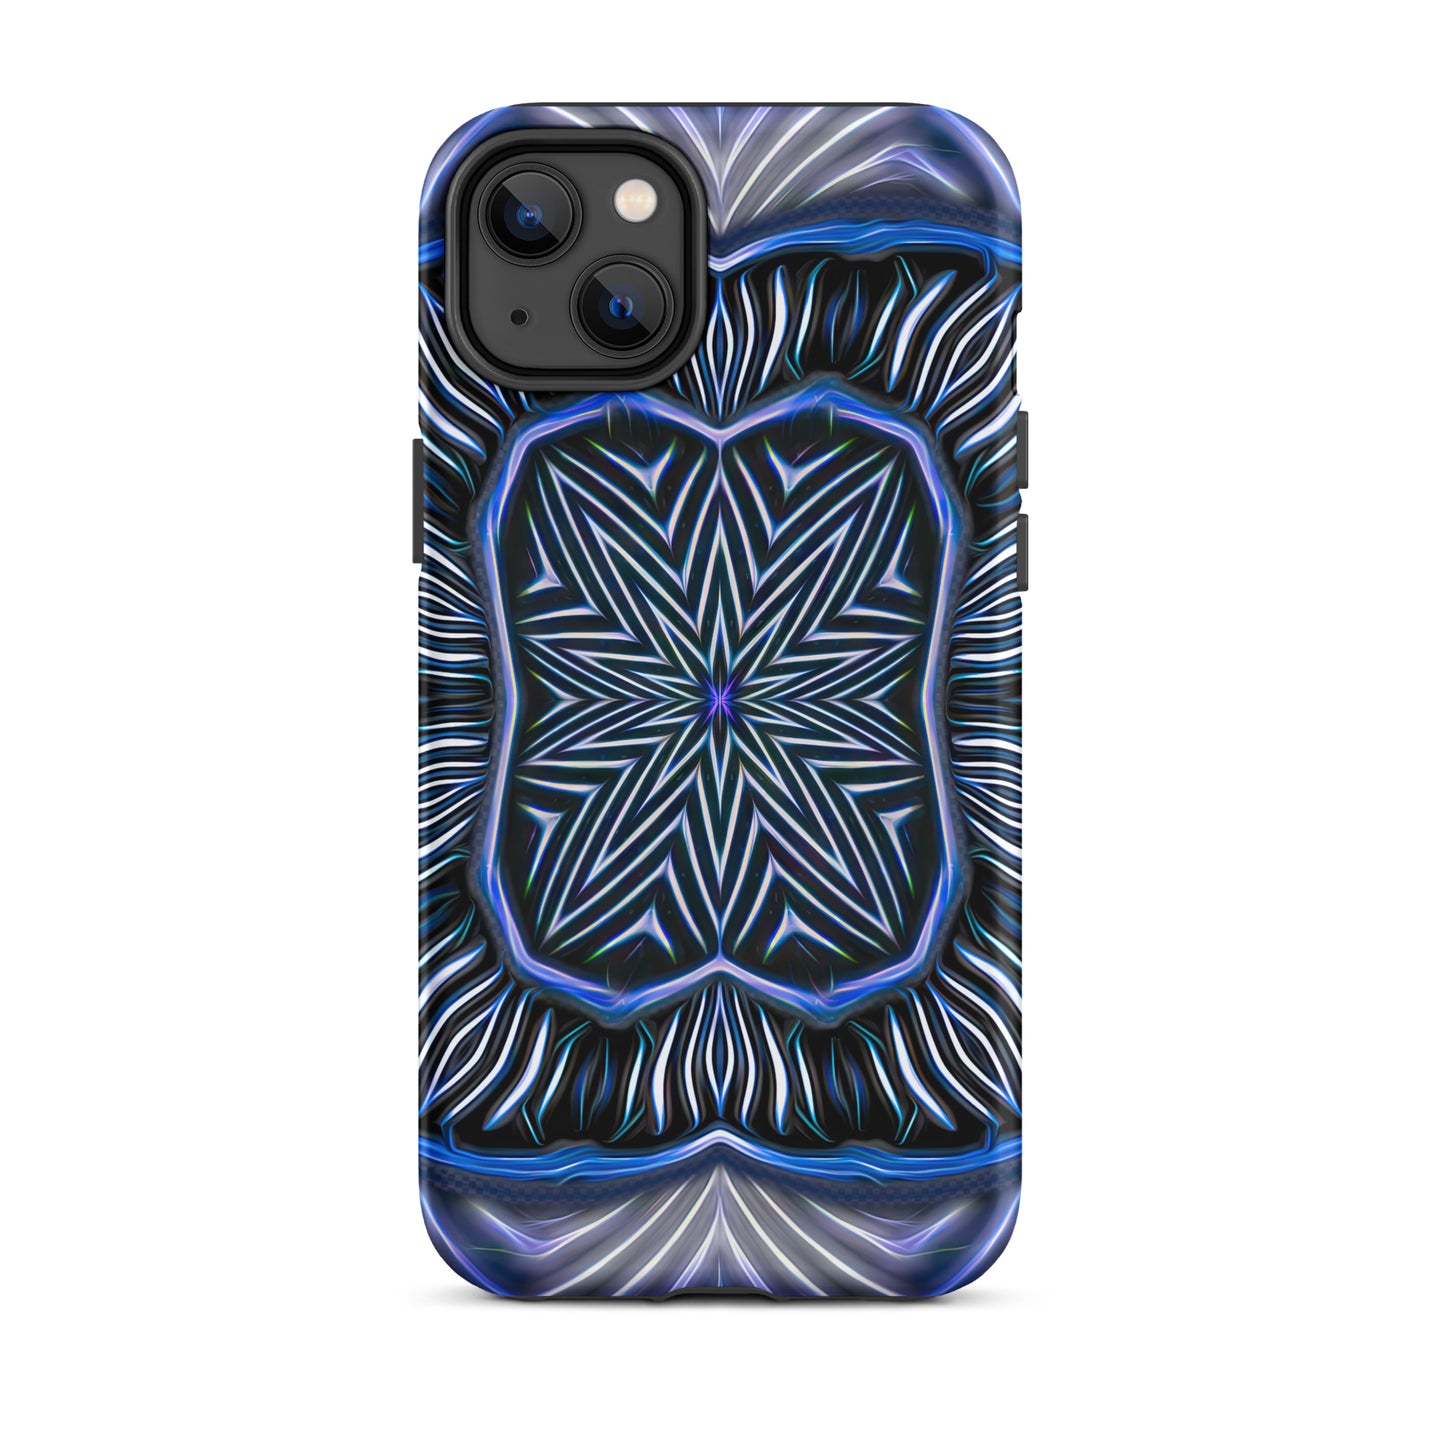 "Blue Electric" Tough iPhone case